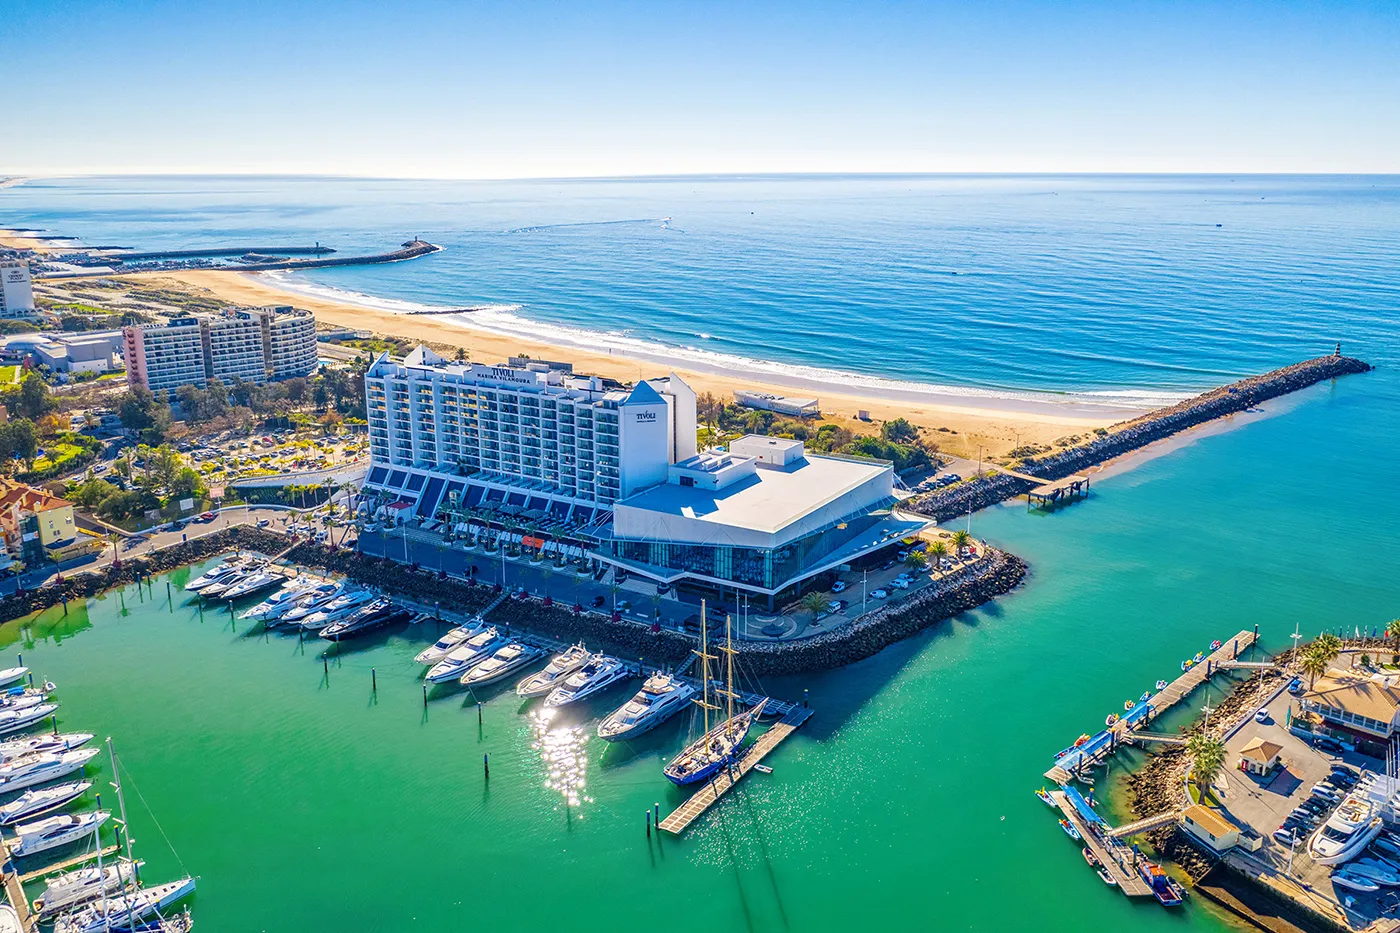 Algarve Congress Center in Vilamoura with ocean view